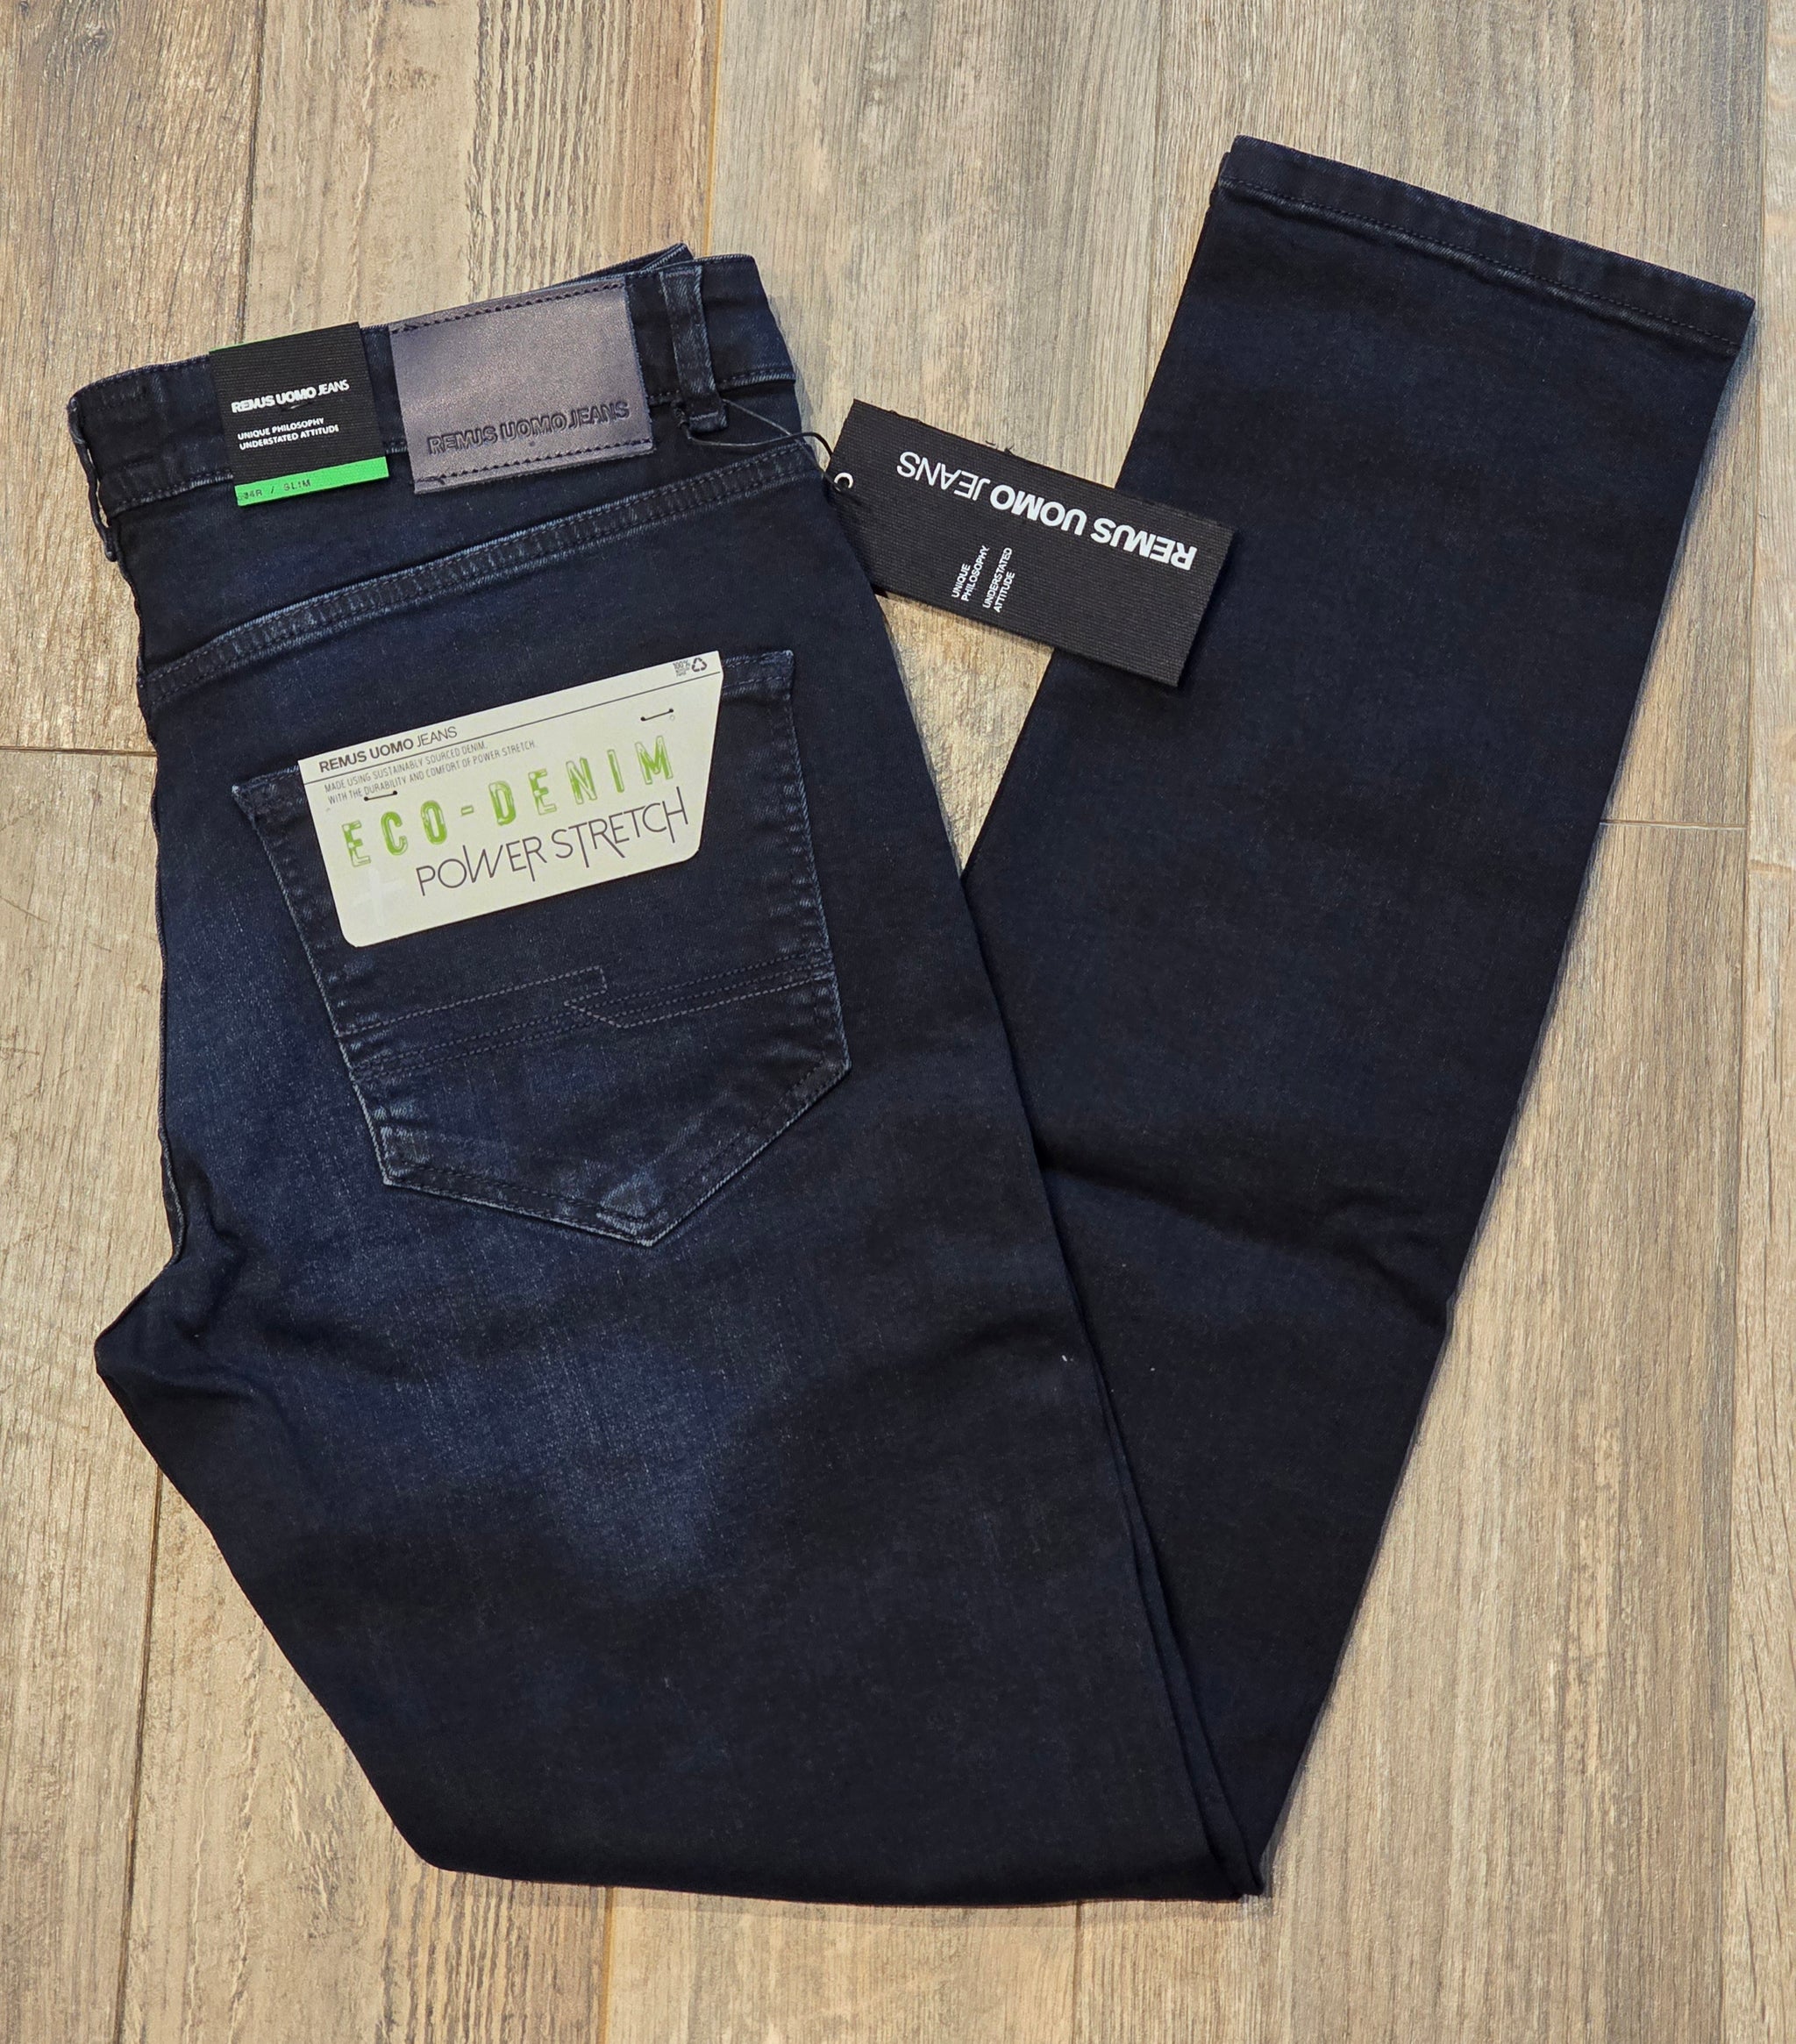 Remus Uomo Jeans - Apollo Slim leg/stretch dark wash jeans